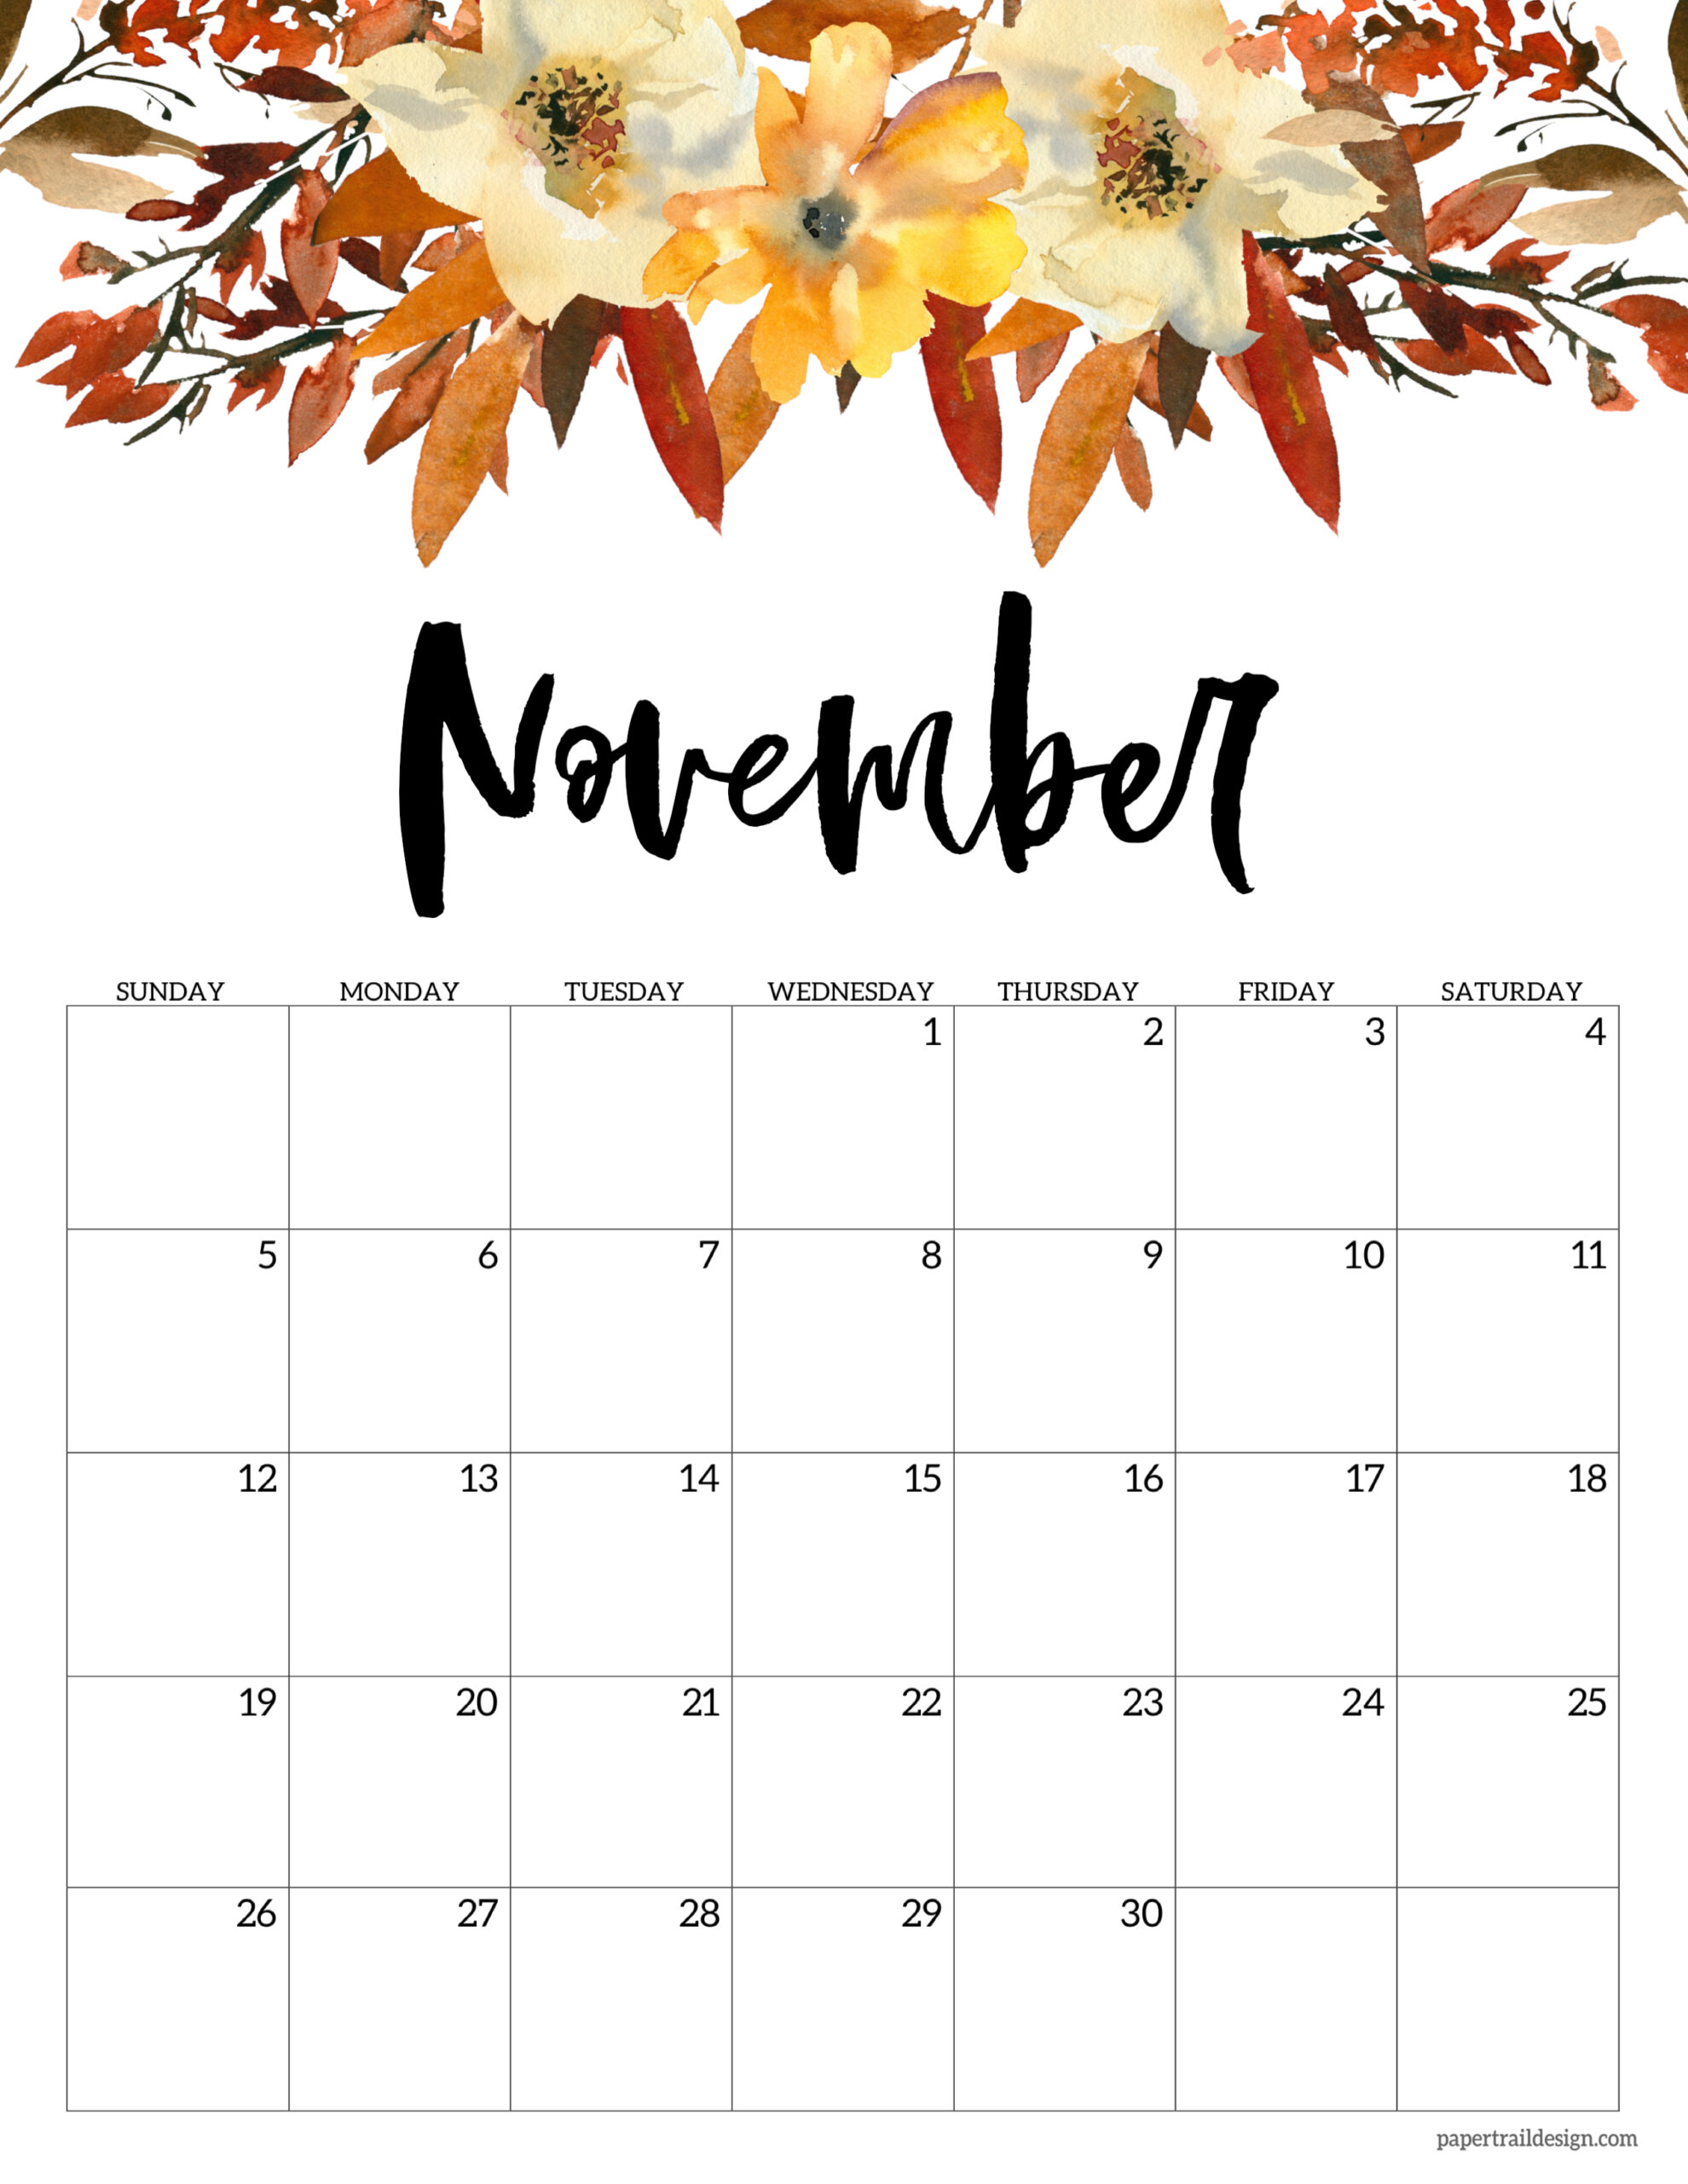 november-2023-to-january-2023-calendar-get-calendar-2023-update